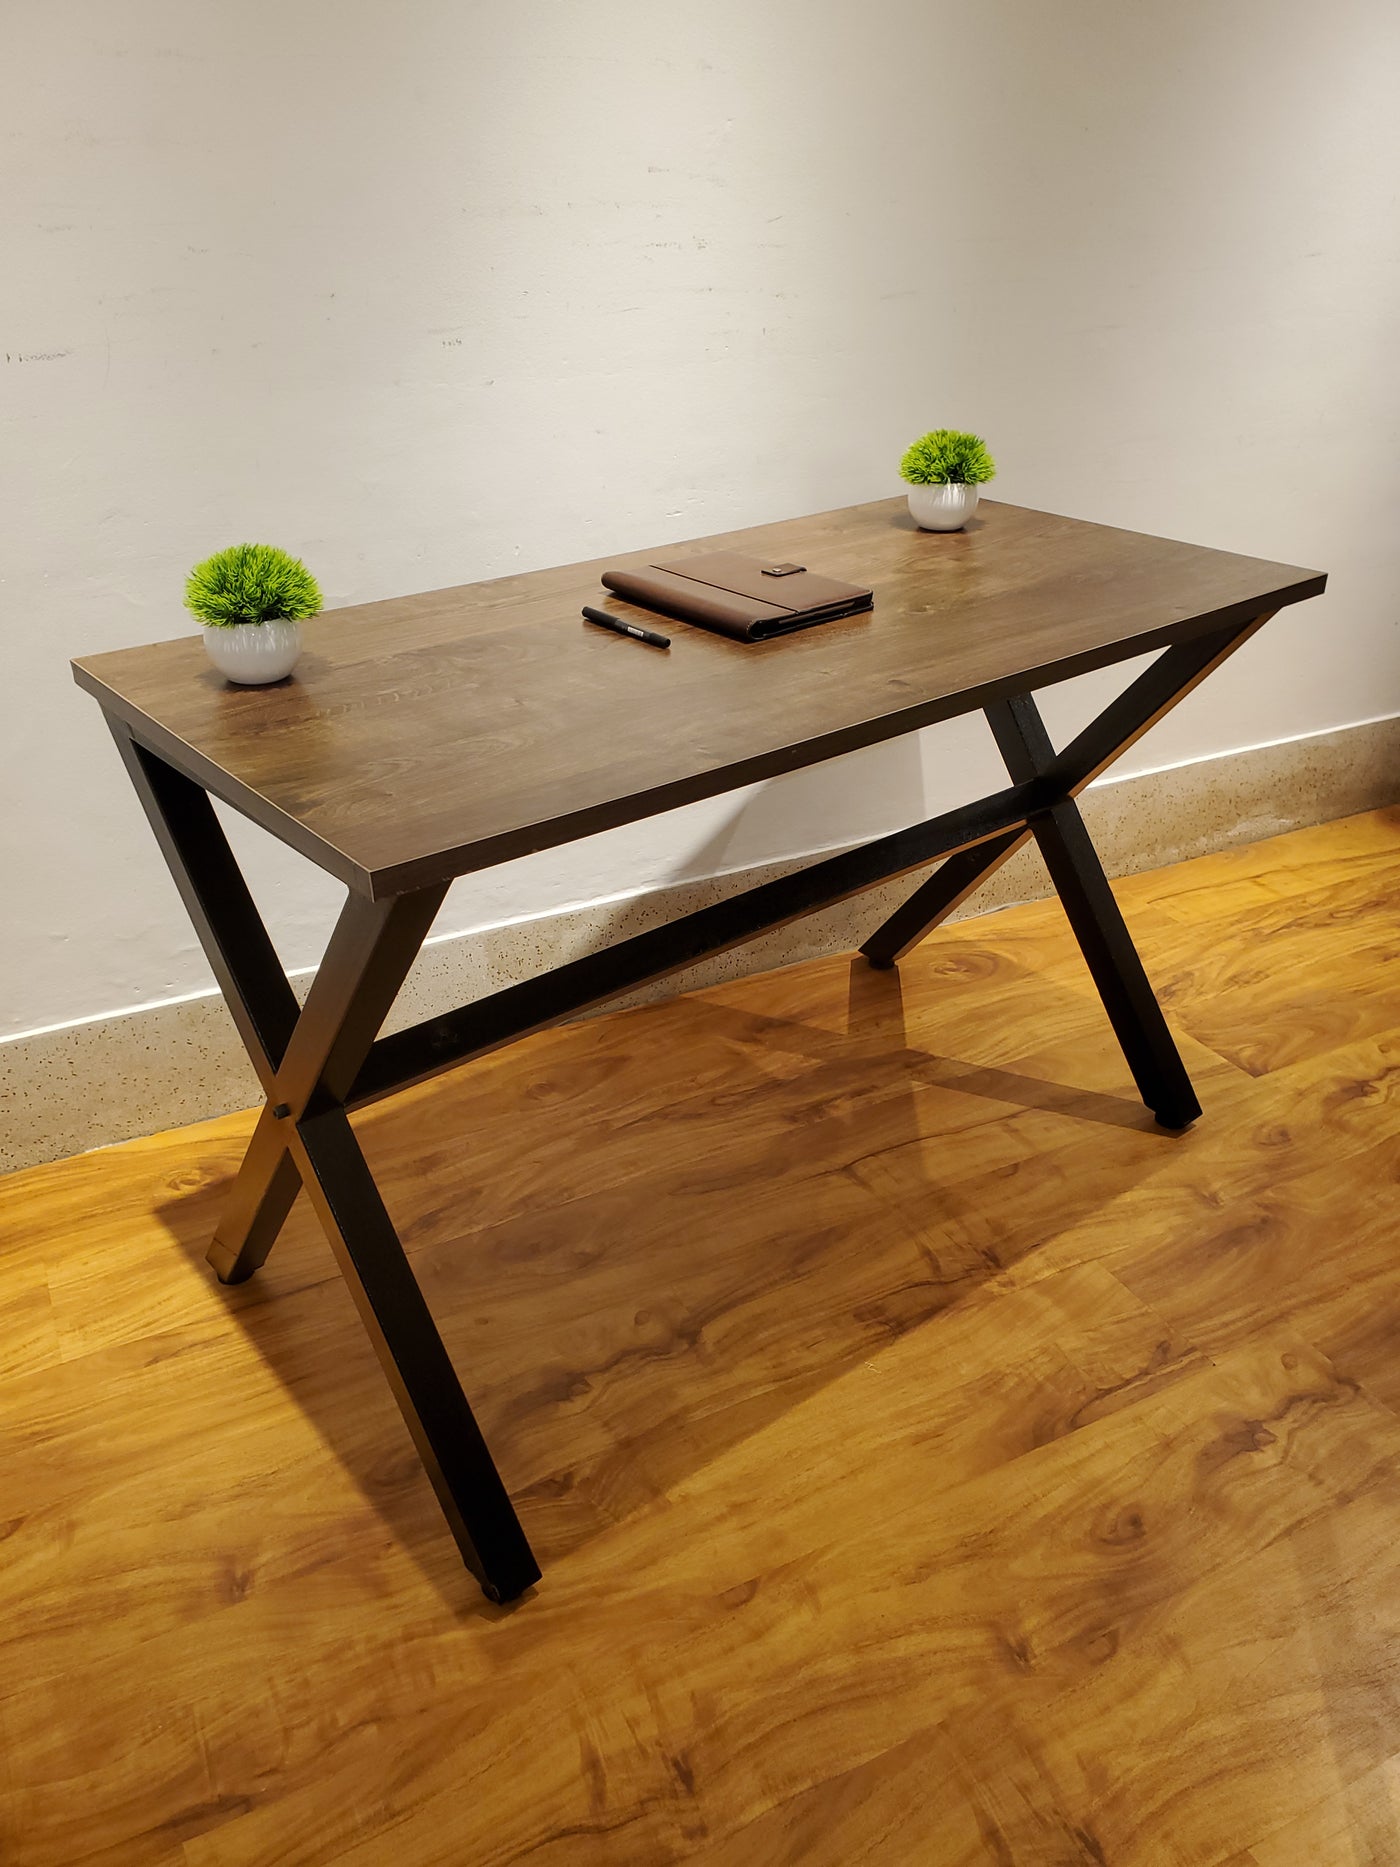 GRID Simplex Desk - X Shape